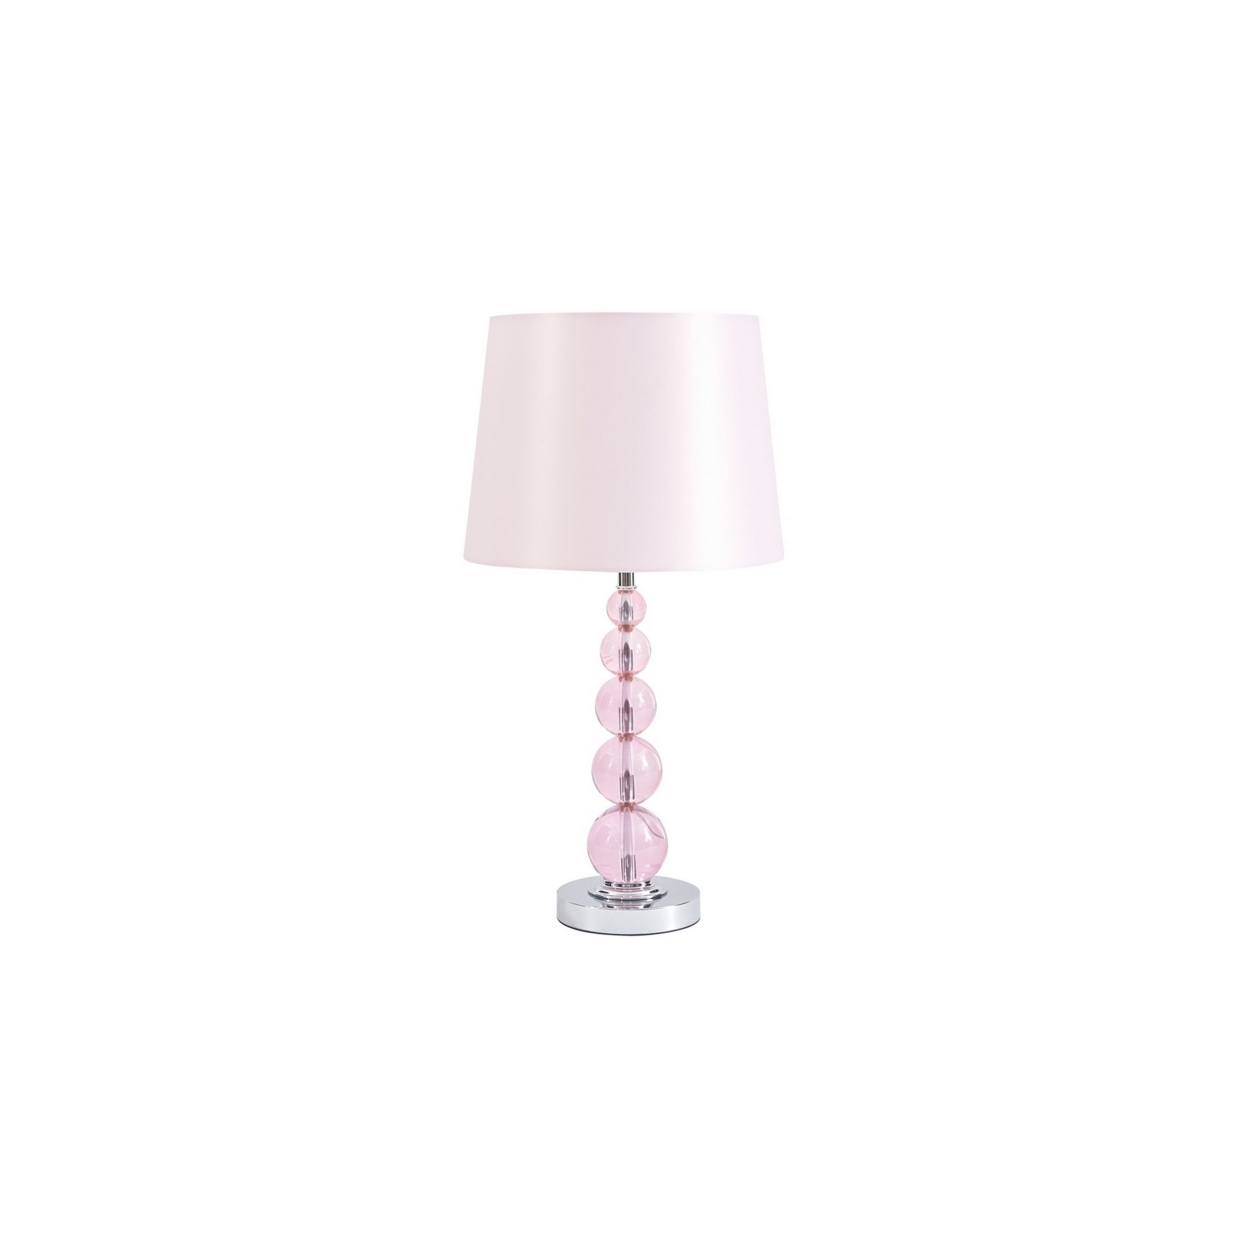 Hardback Shade Table Lamp With Crystal Accents, Pink- Saltoro Sherpi